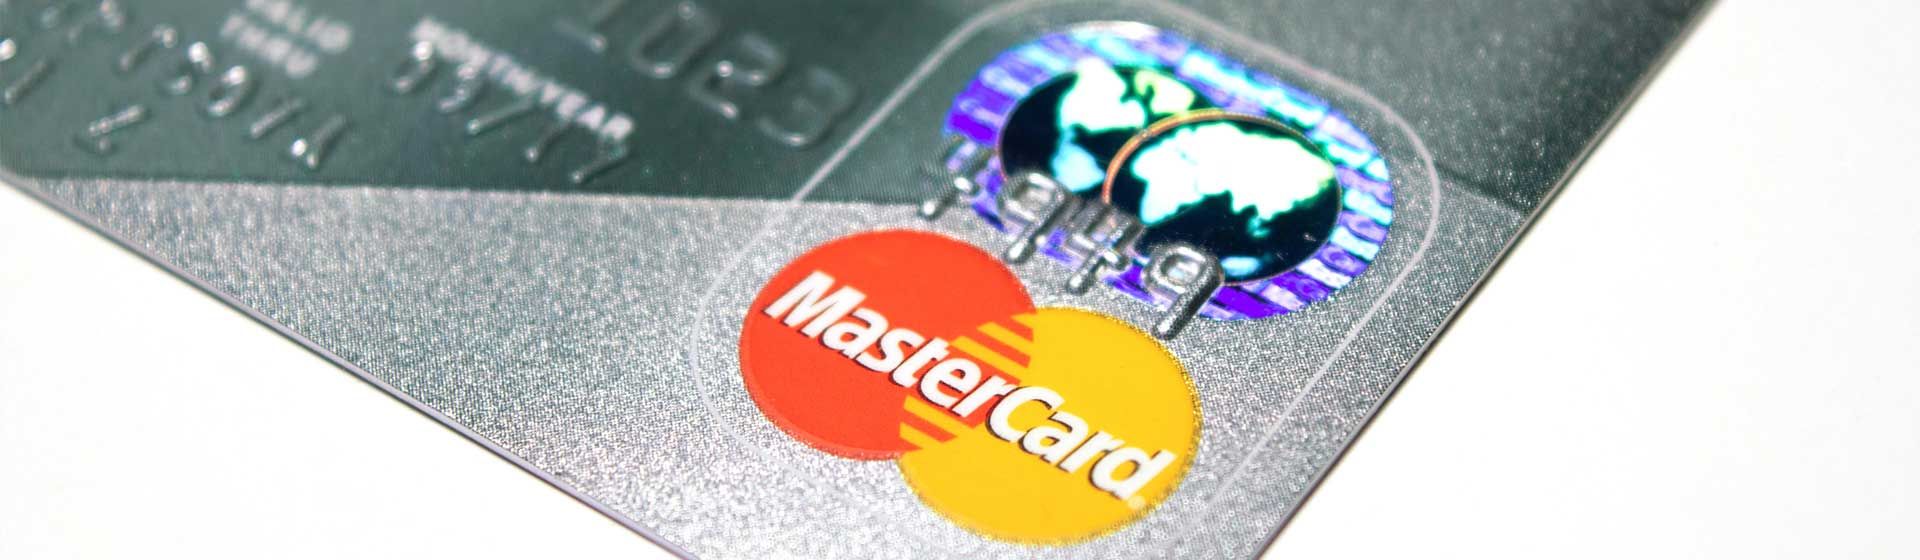 Unberechtigte Kreditkartenabbuchungen